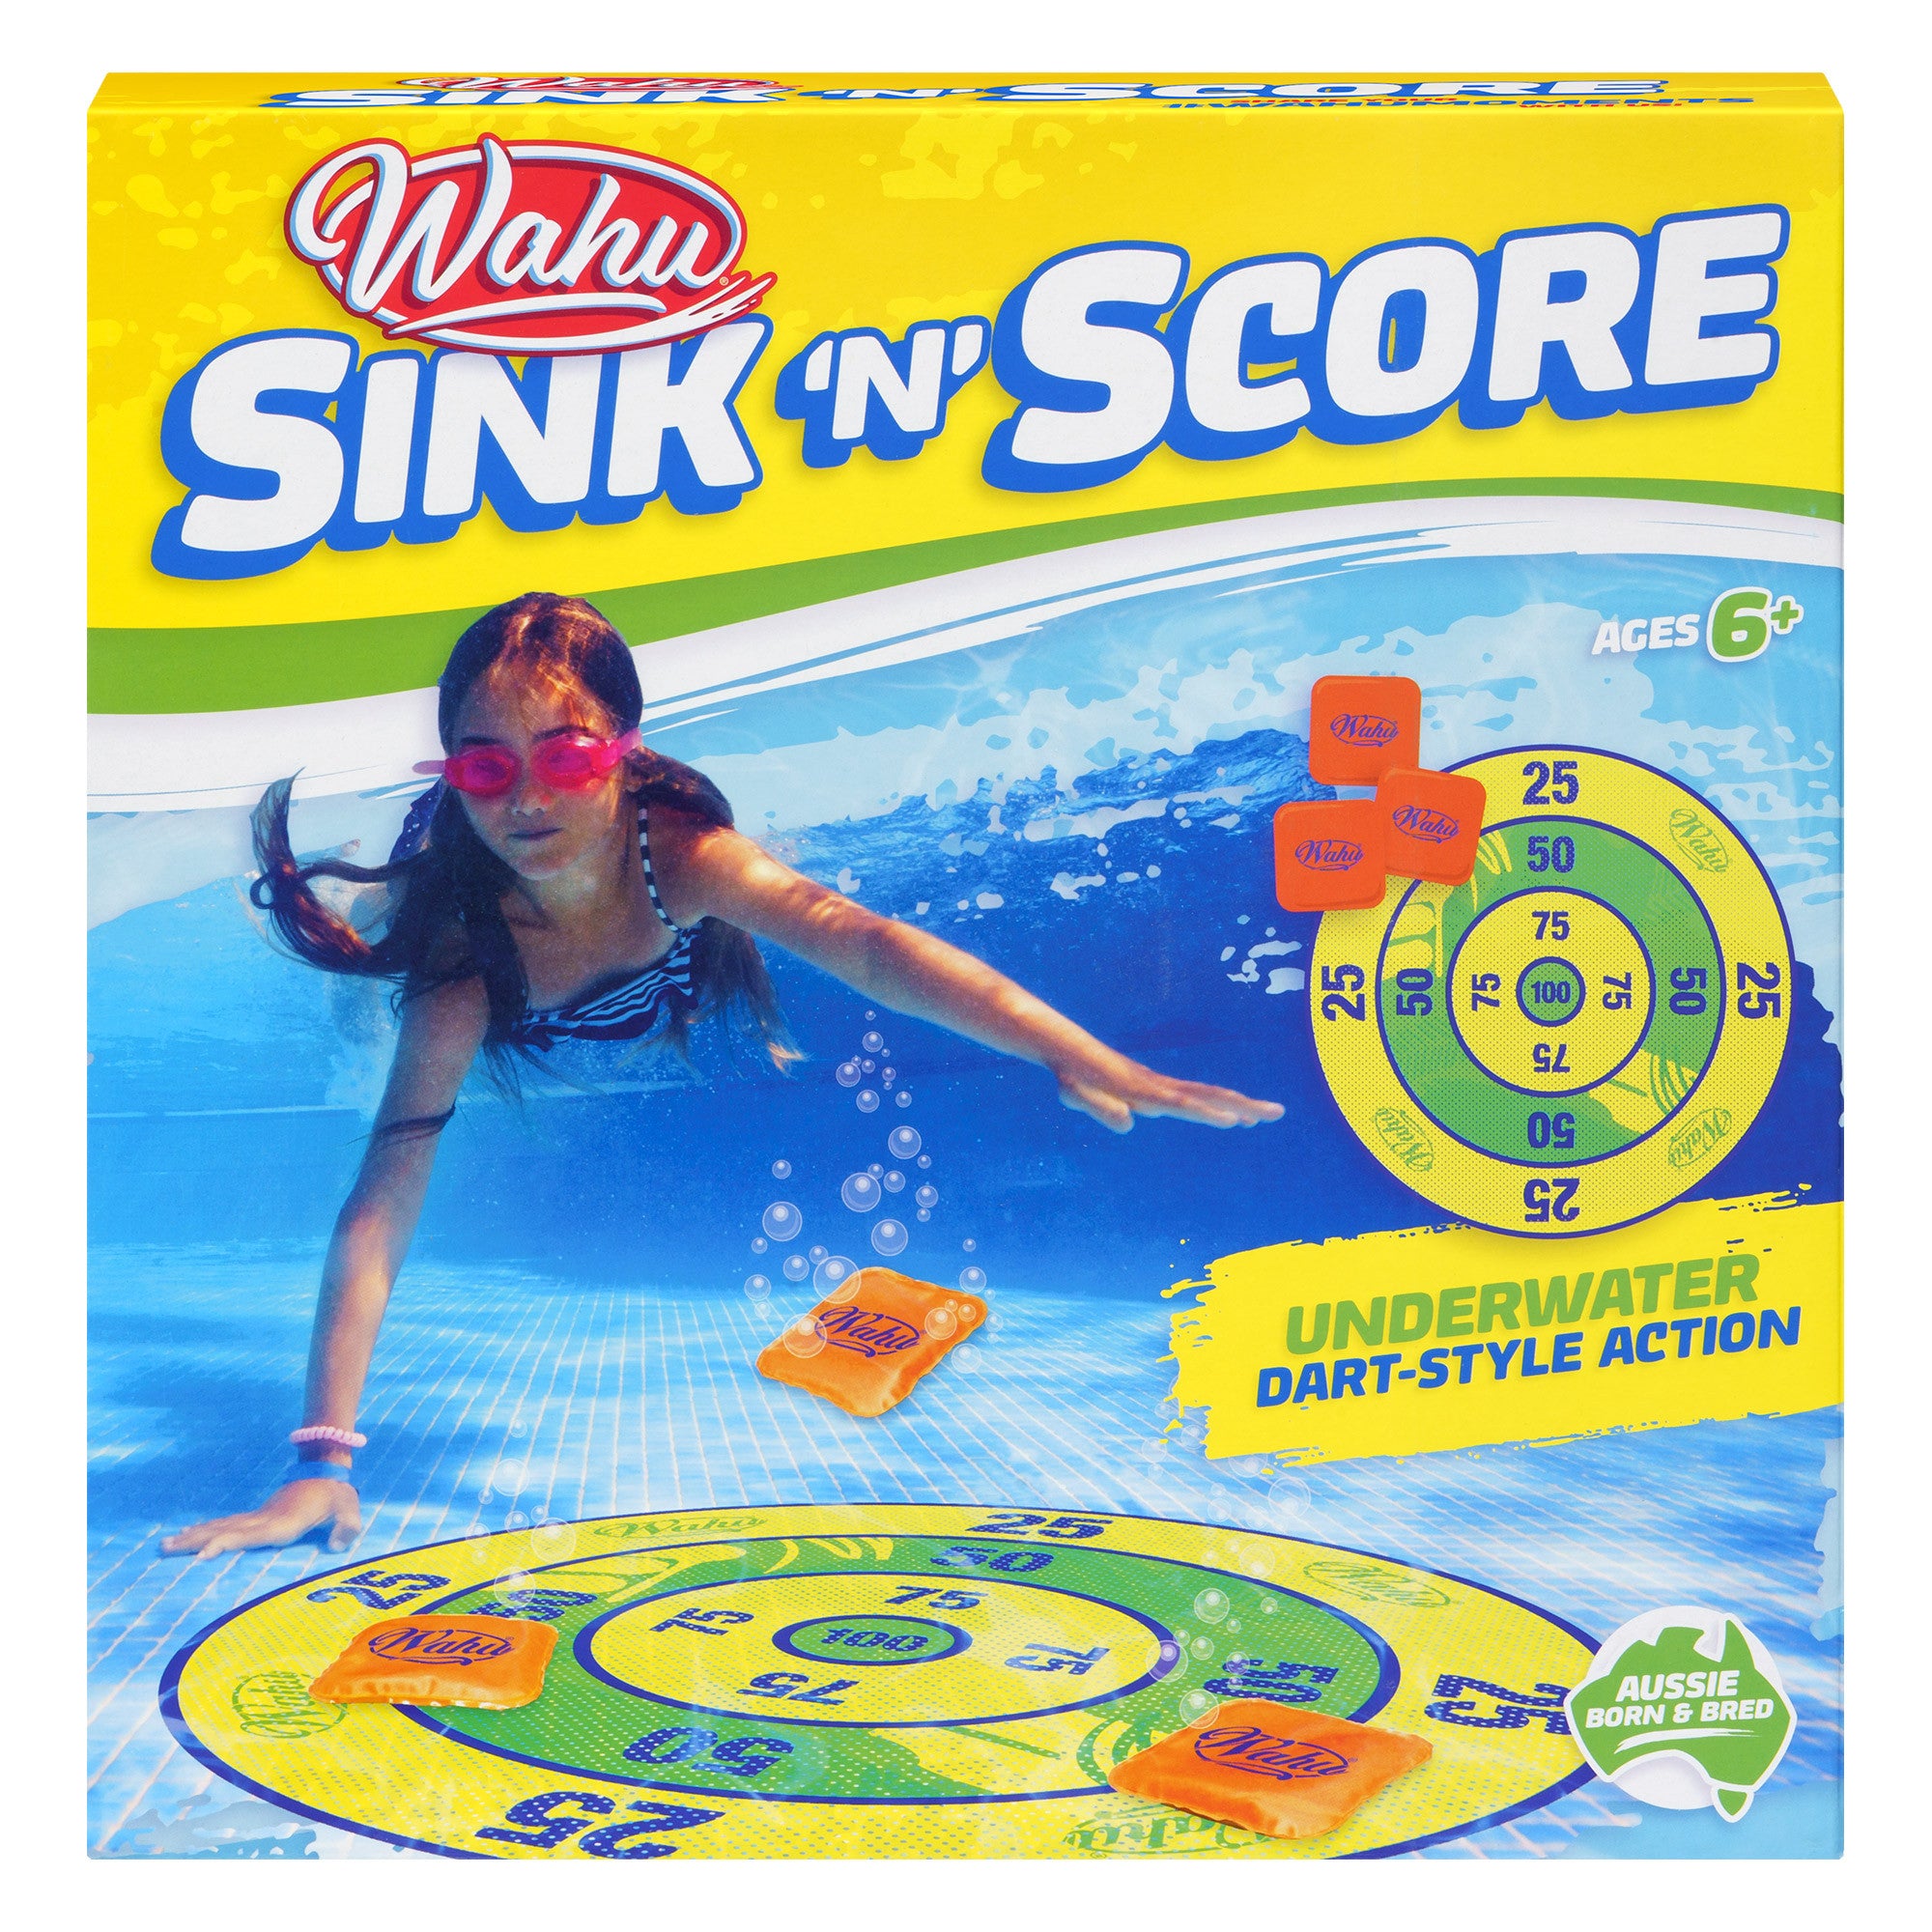 Wahu Sink N Score